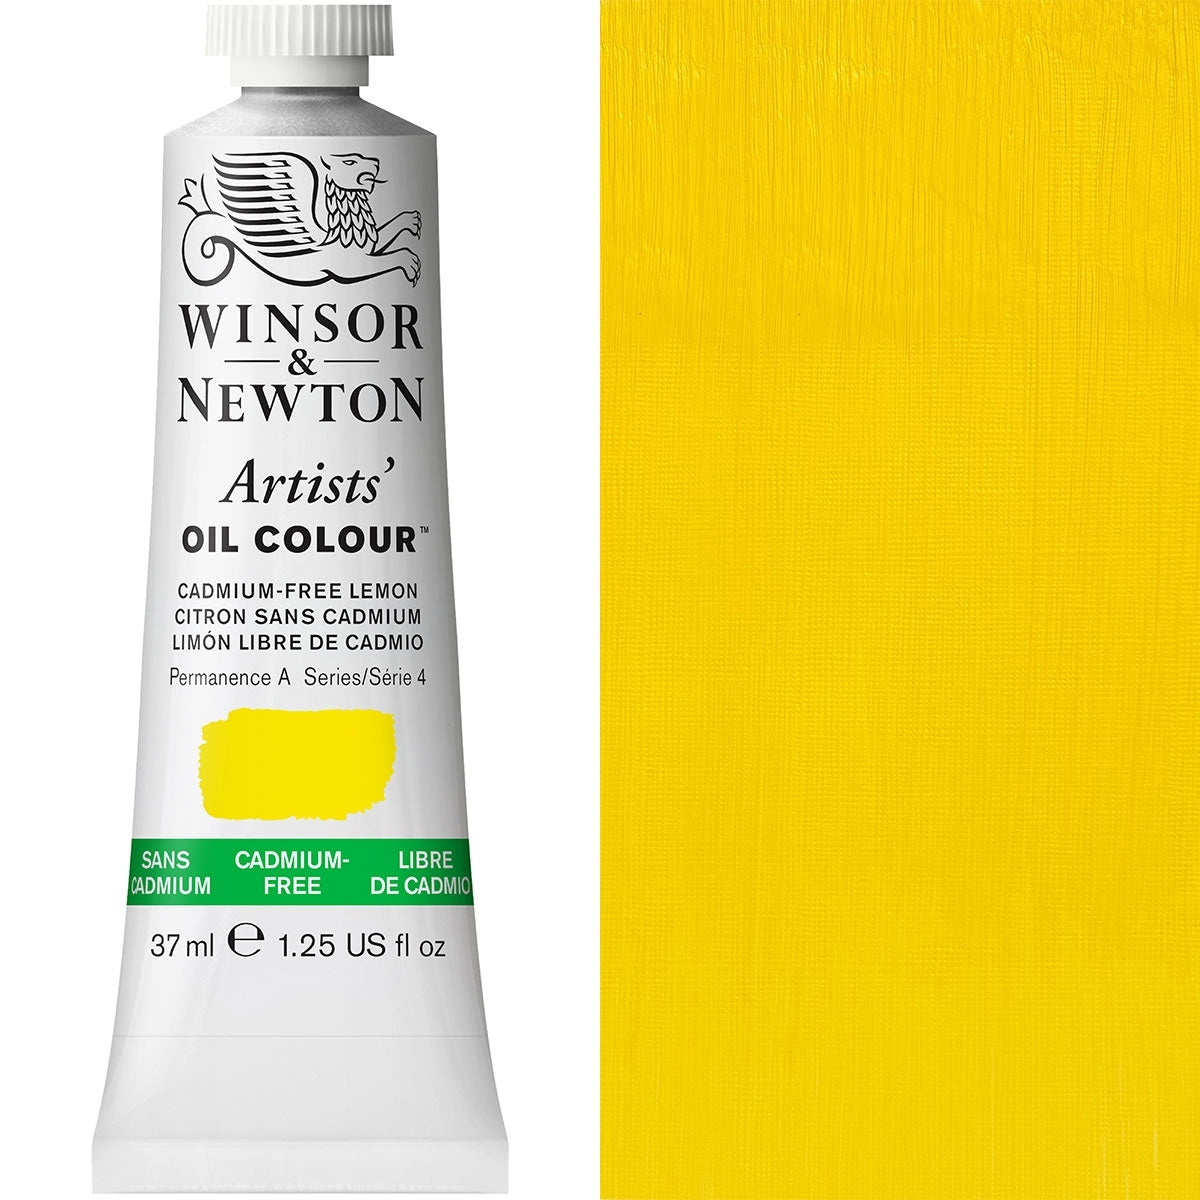 Winsor and Newton - Artists' Oil Colour - 37ml - Cad Free Lemon